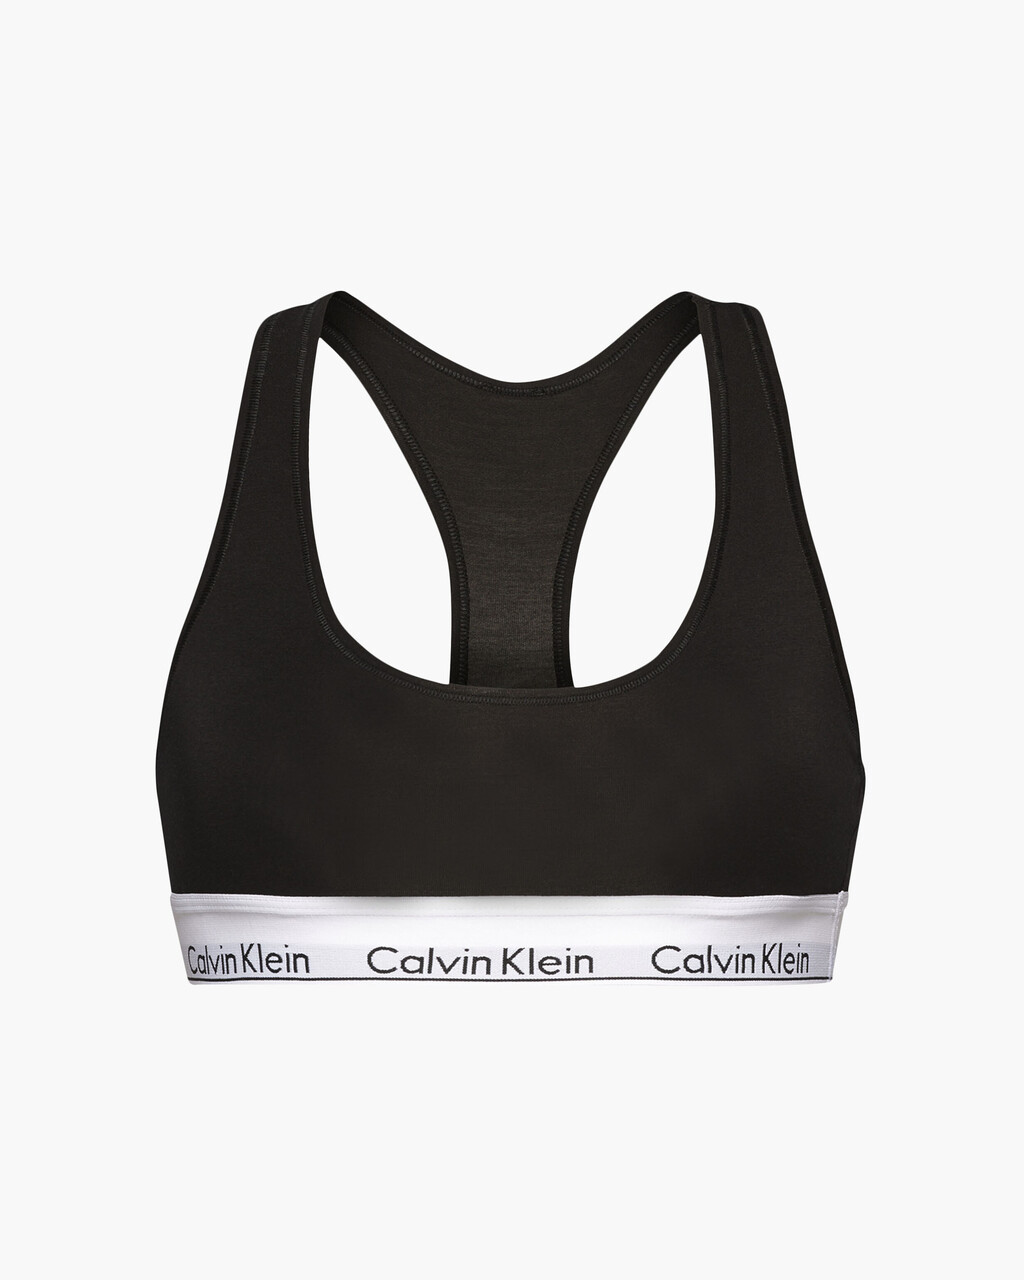 Calvin Klein Women's Cotton Bralette & Briefs Underwear Set in Black (In  Stock!), Women's Fashion, New Undergarments & Loungewear on Carousell